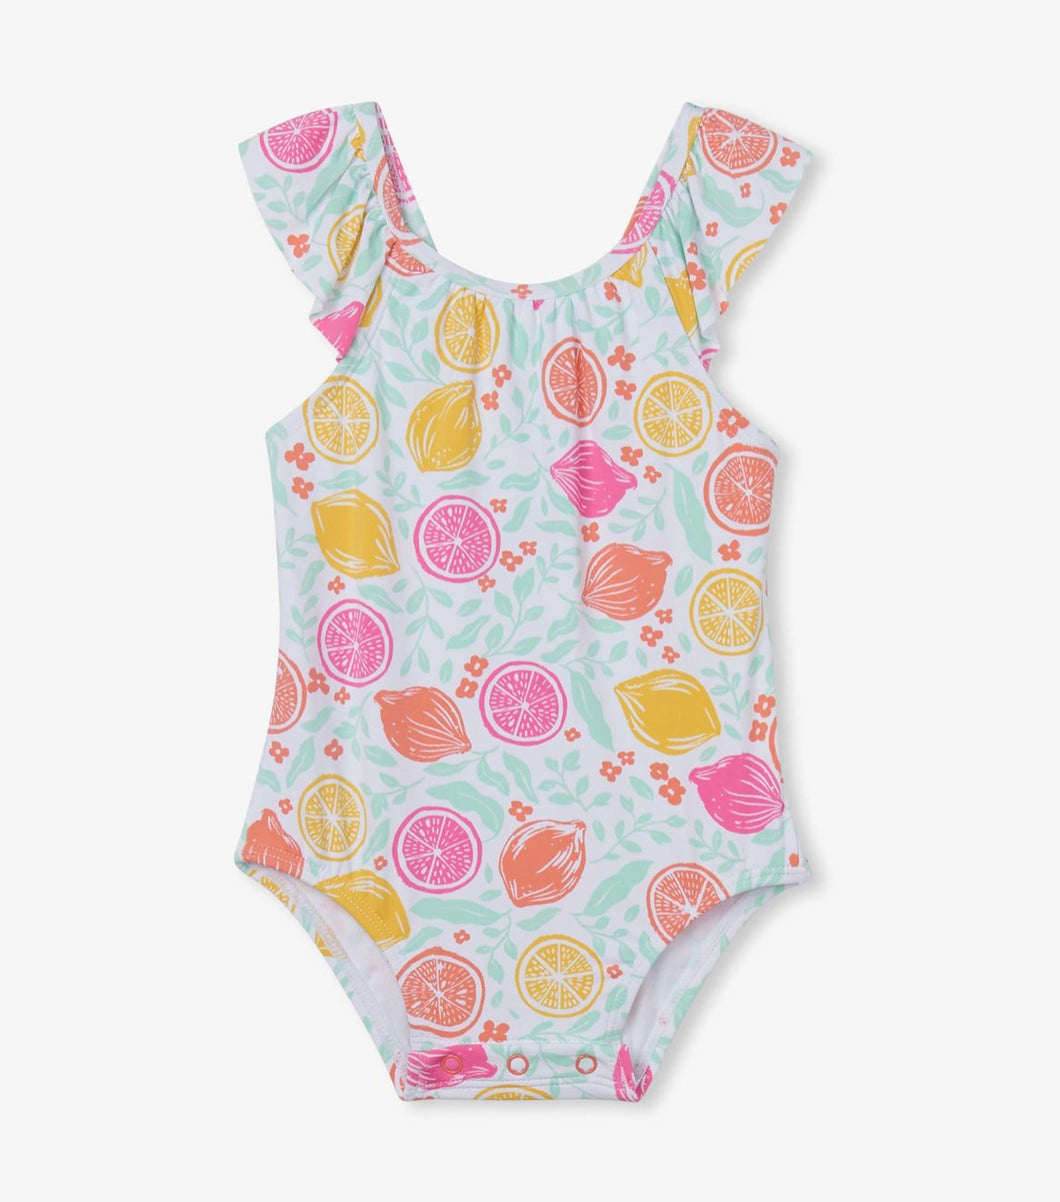 Hatley Citrus Baby Ruffle Swimsuit